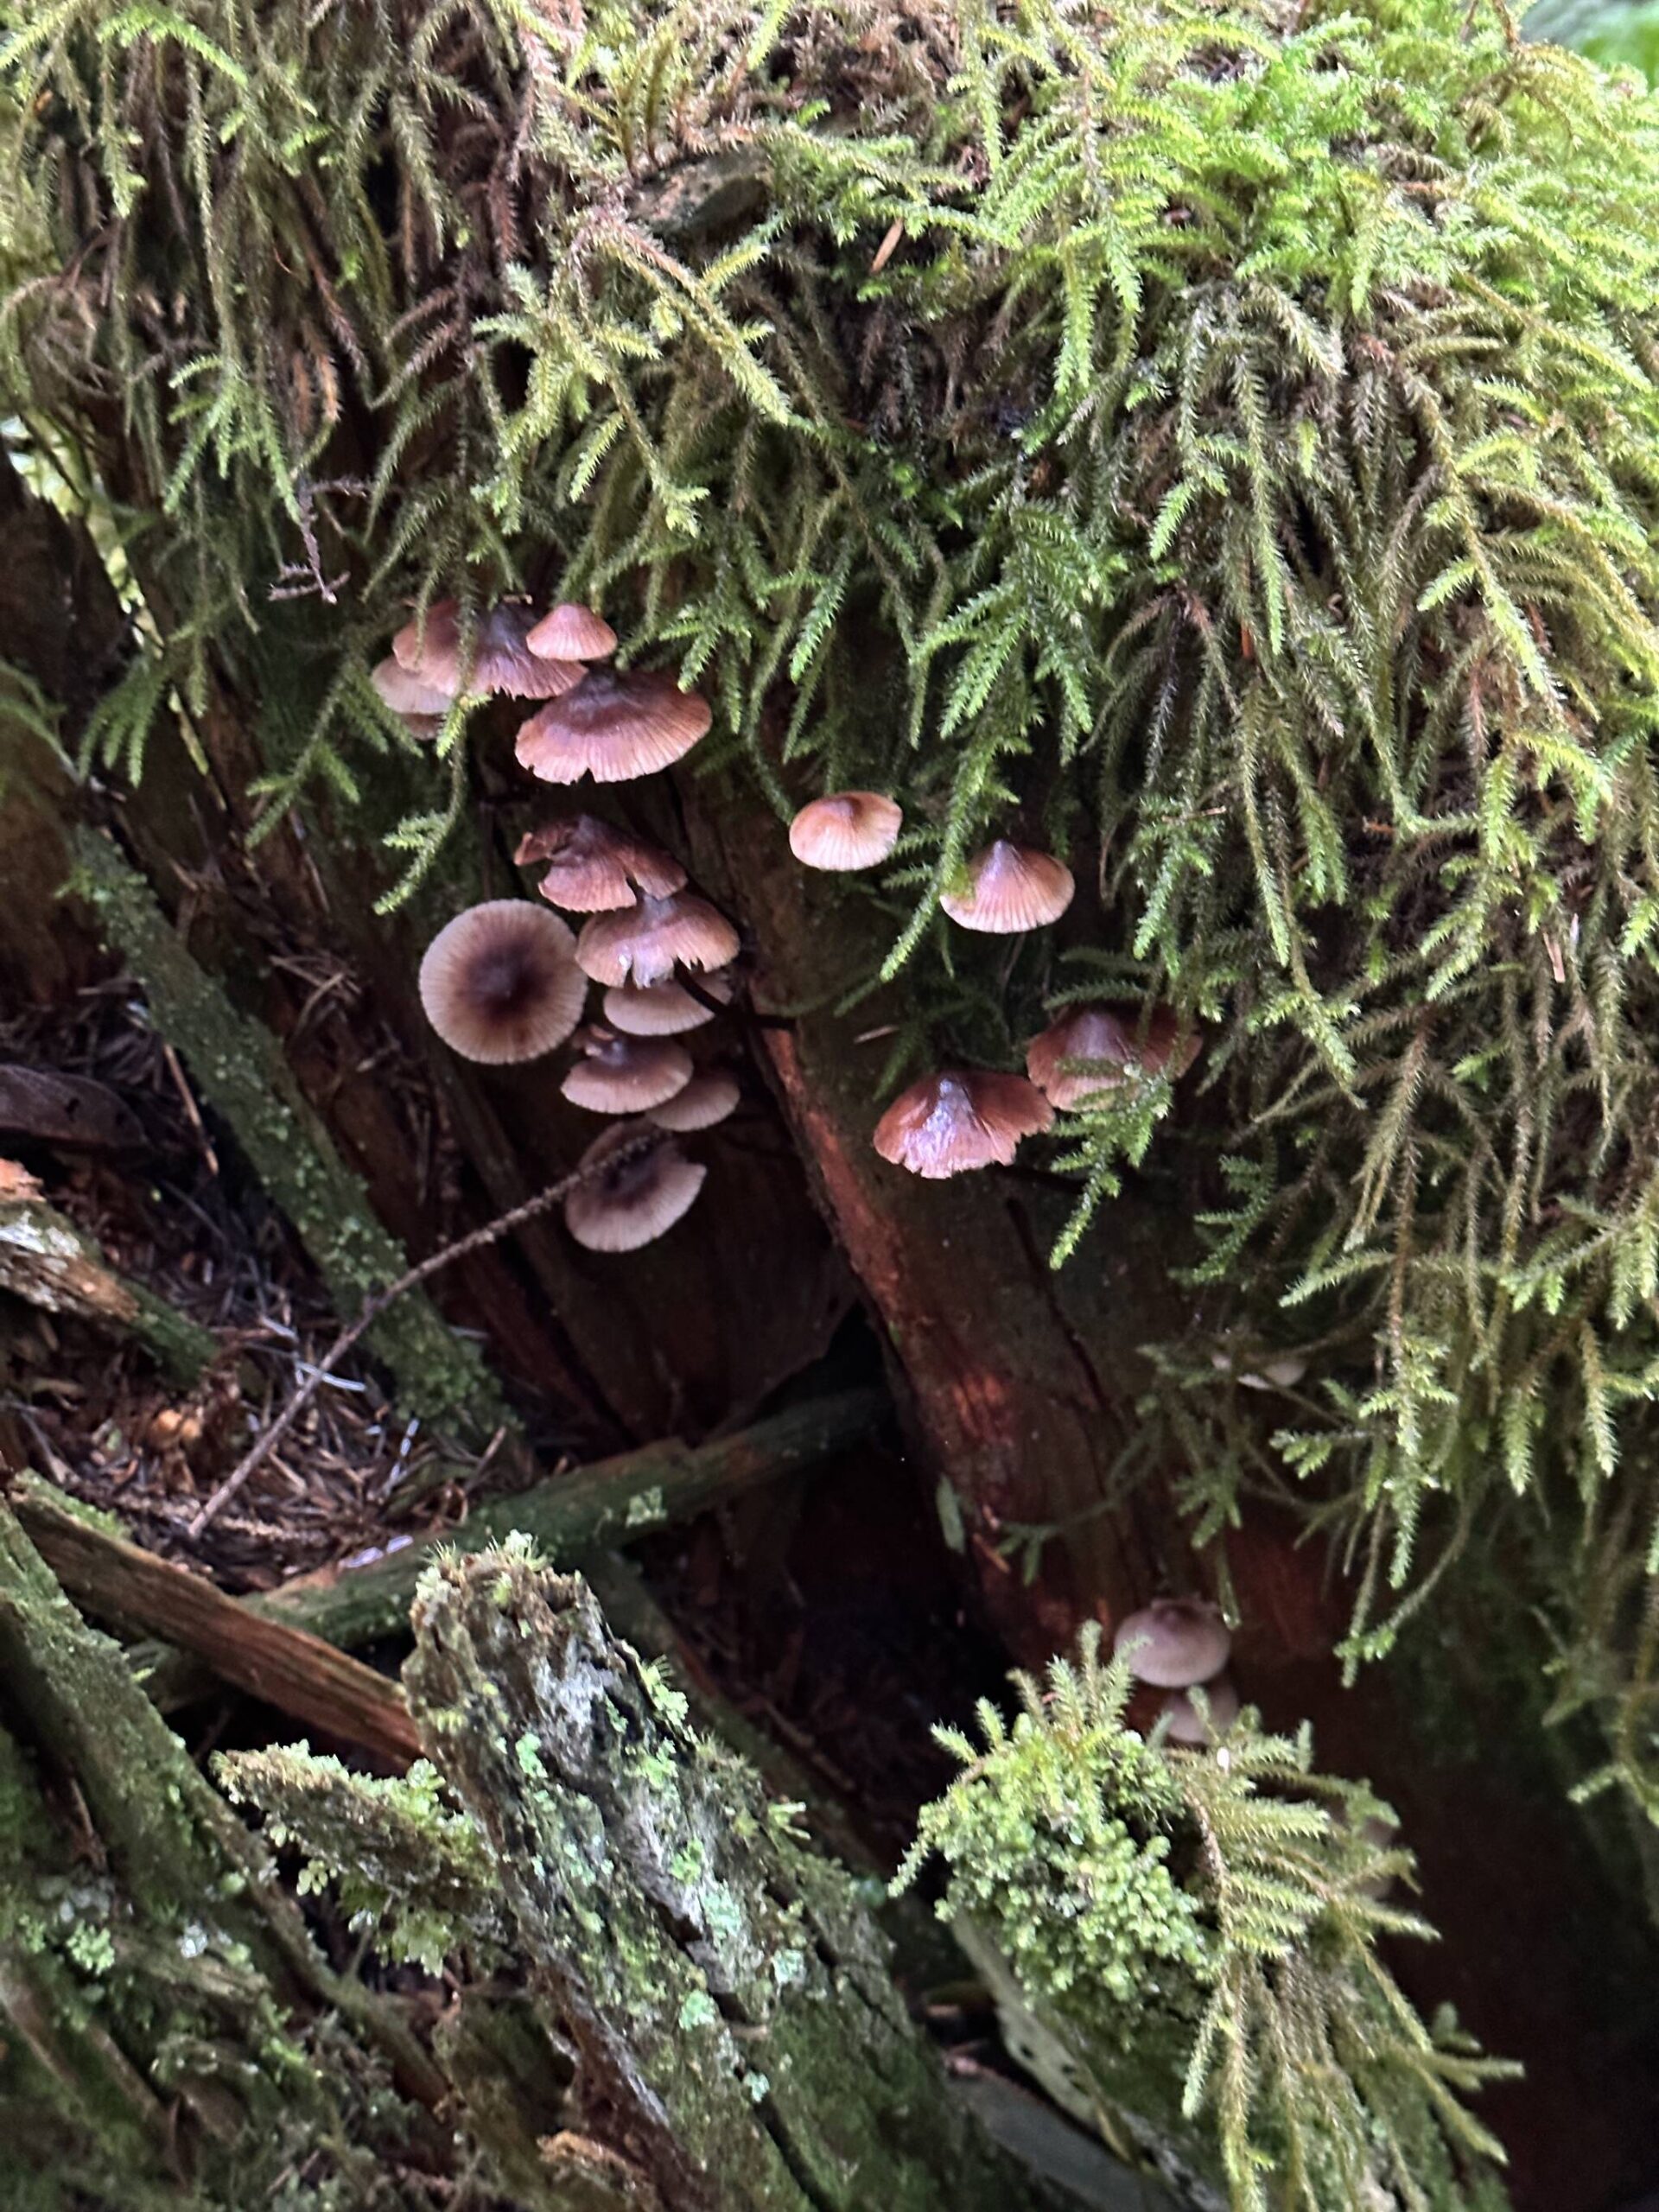 Mushrooms and undergrowth along the Dzantik’i Heeni Loop Trail on Sept. 16. (Photo by Deana Barajas)